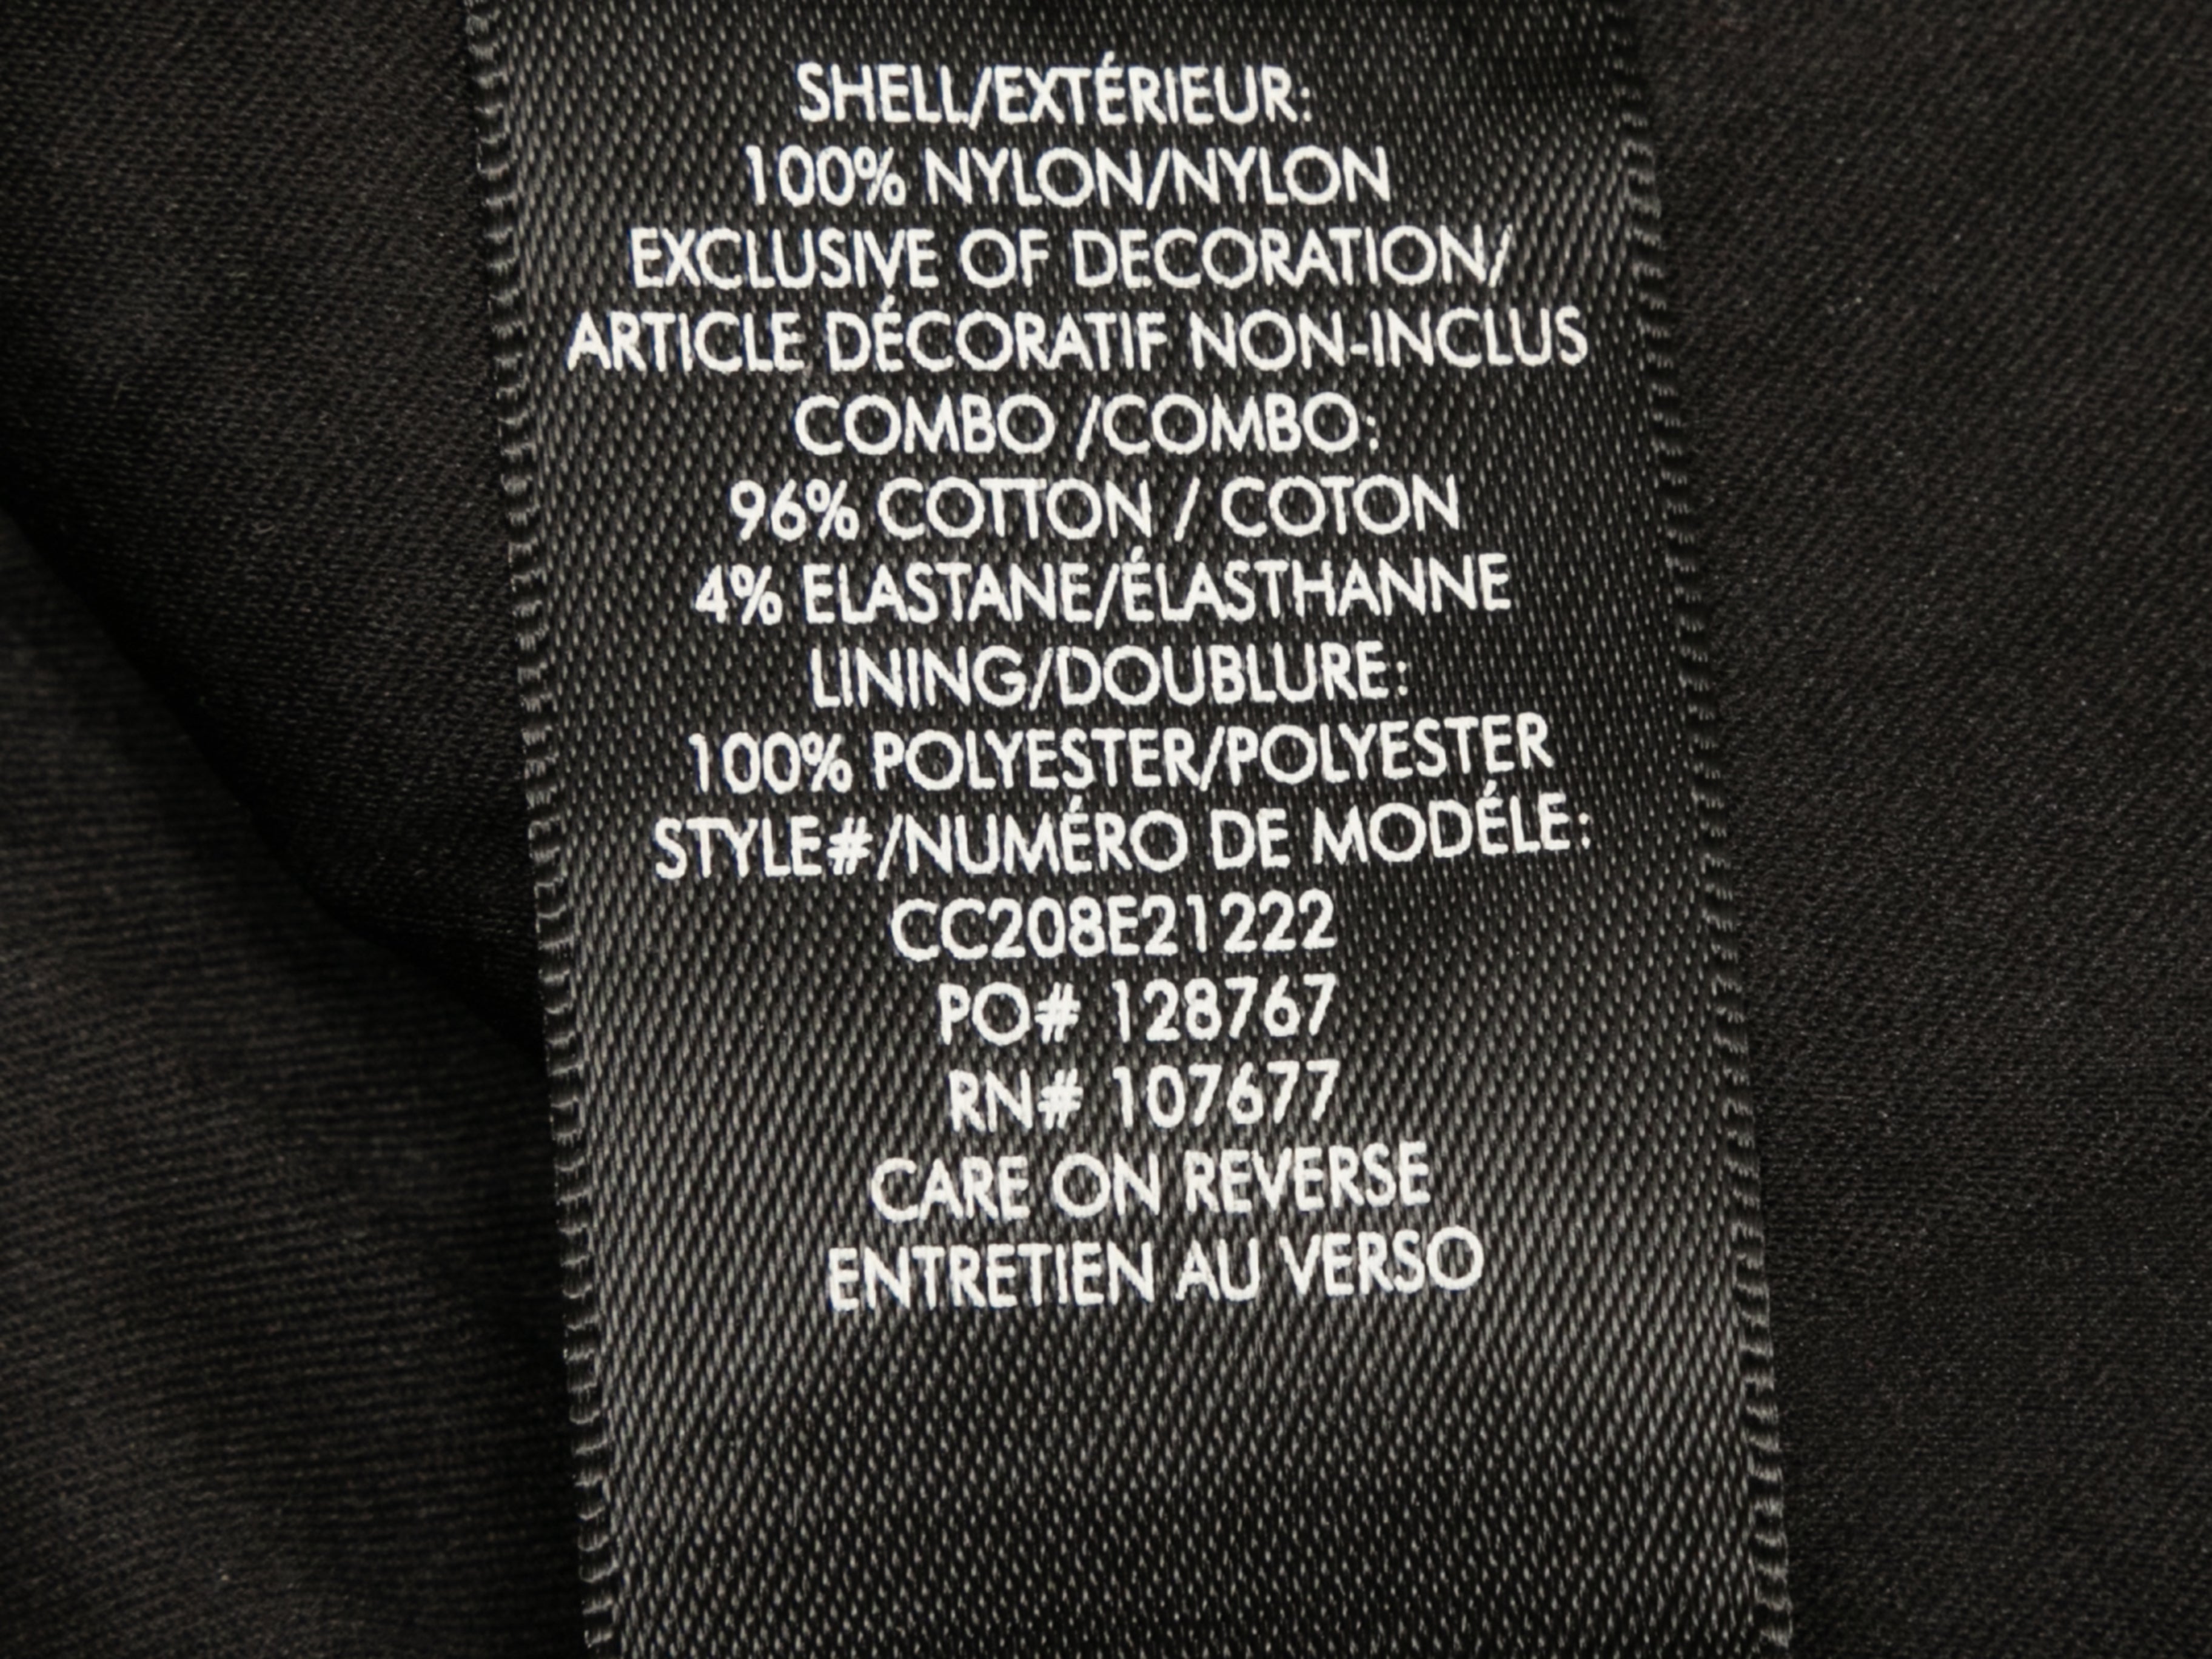 Black & Sequined Houndstooth Jacket Size US S